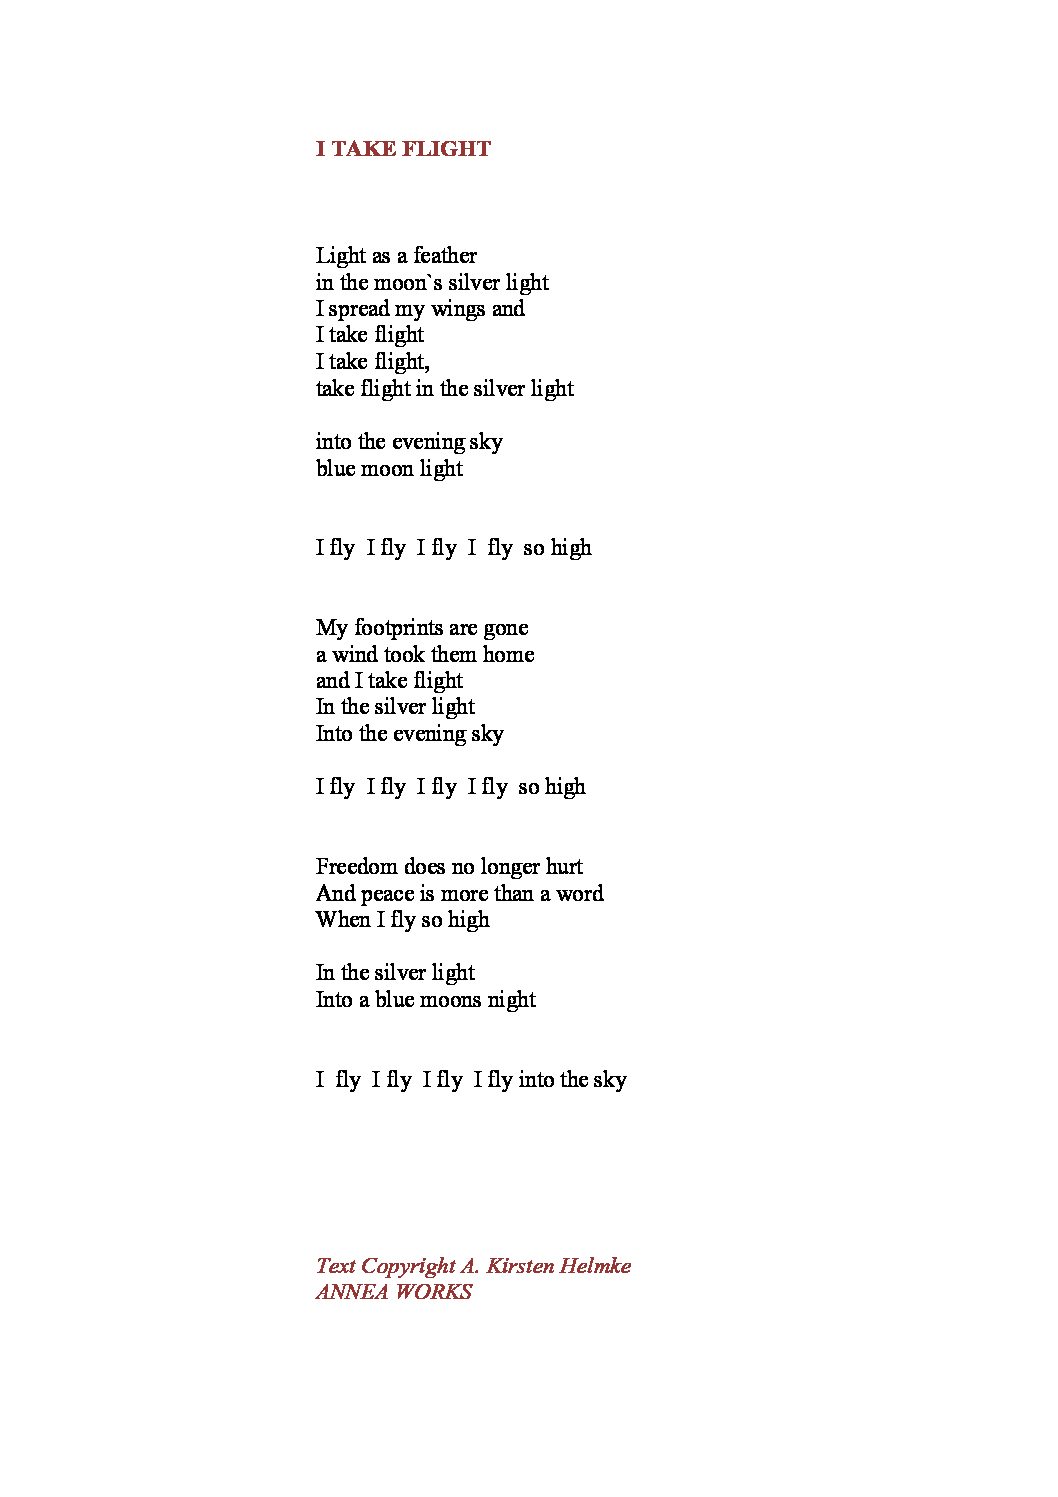 Songtext - I take flight